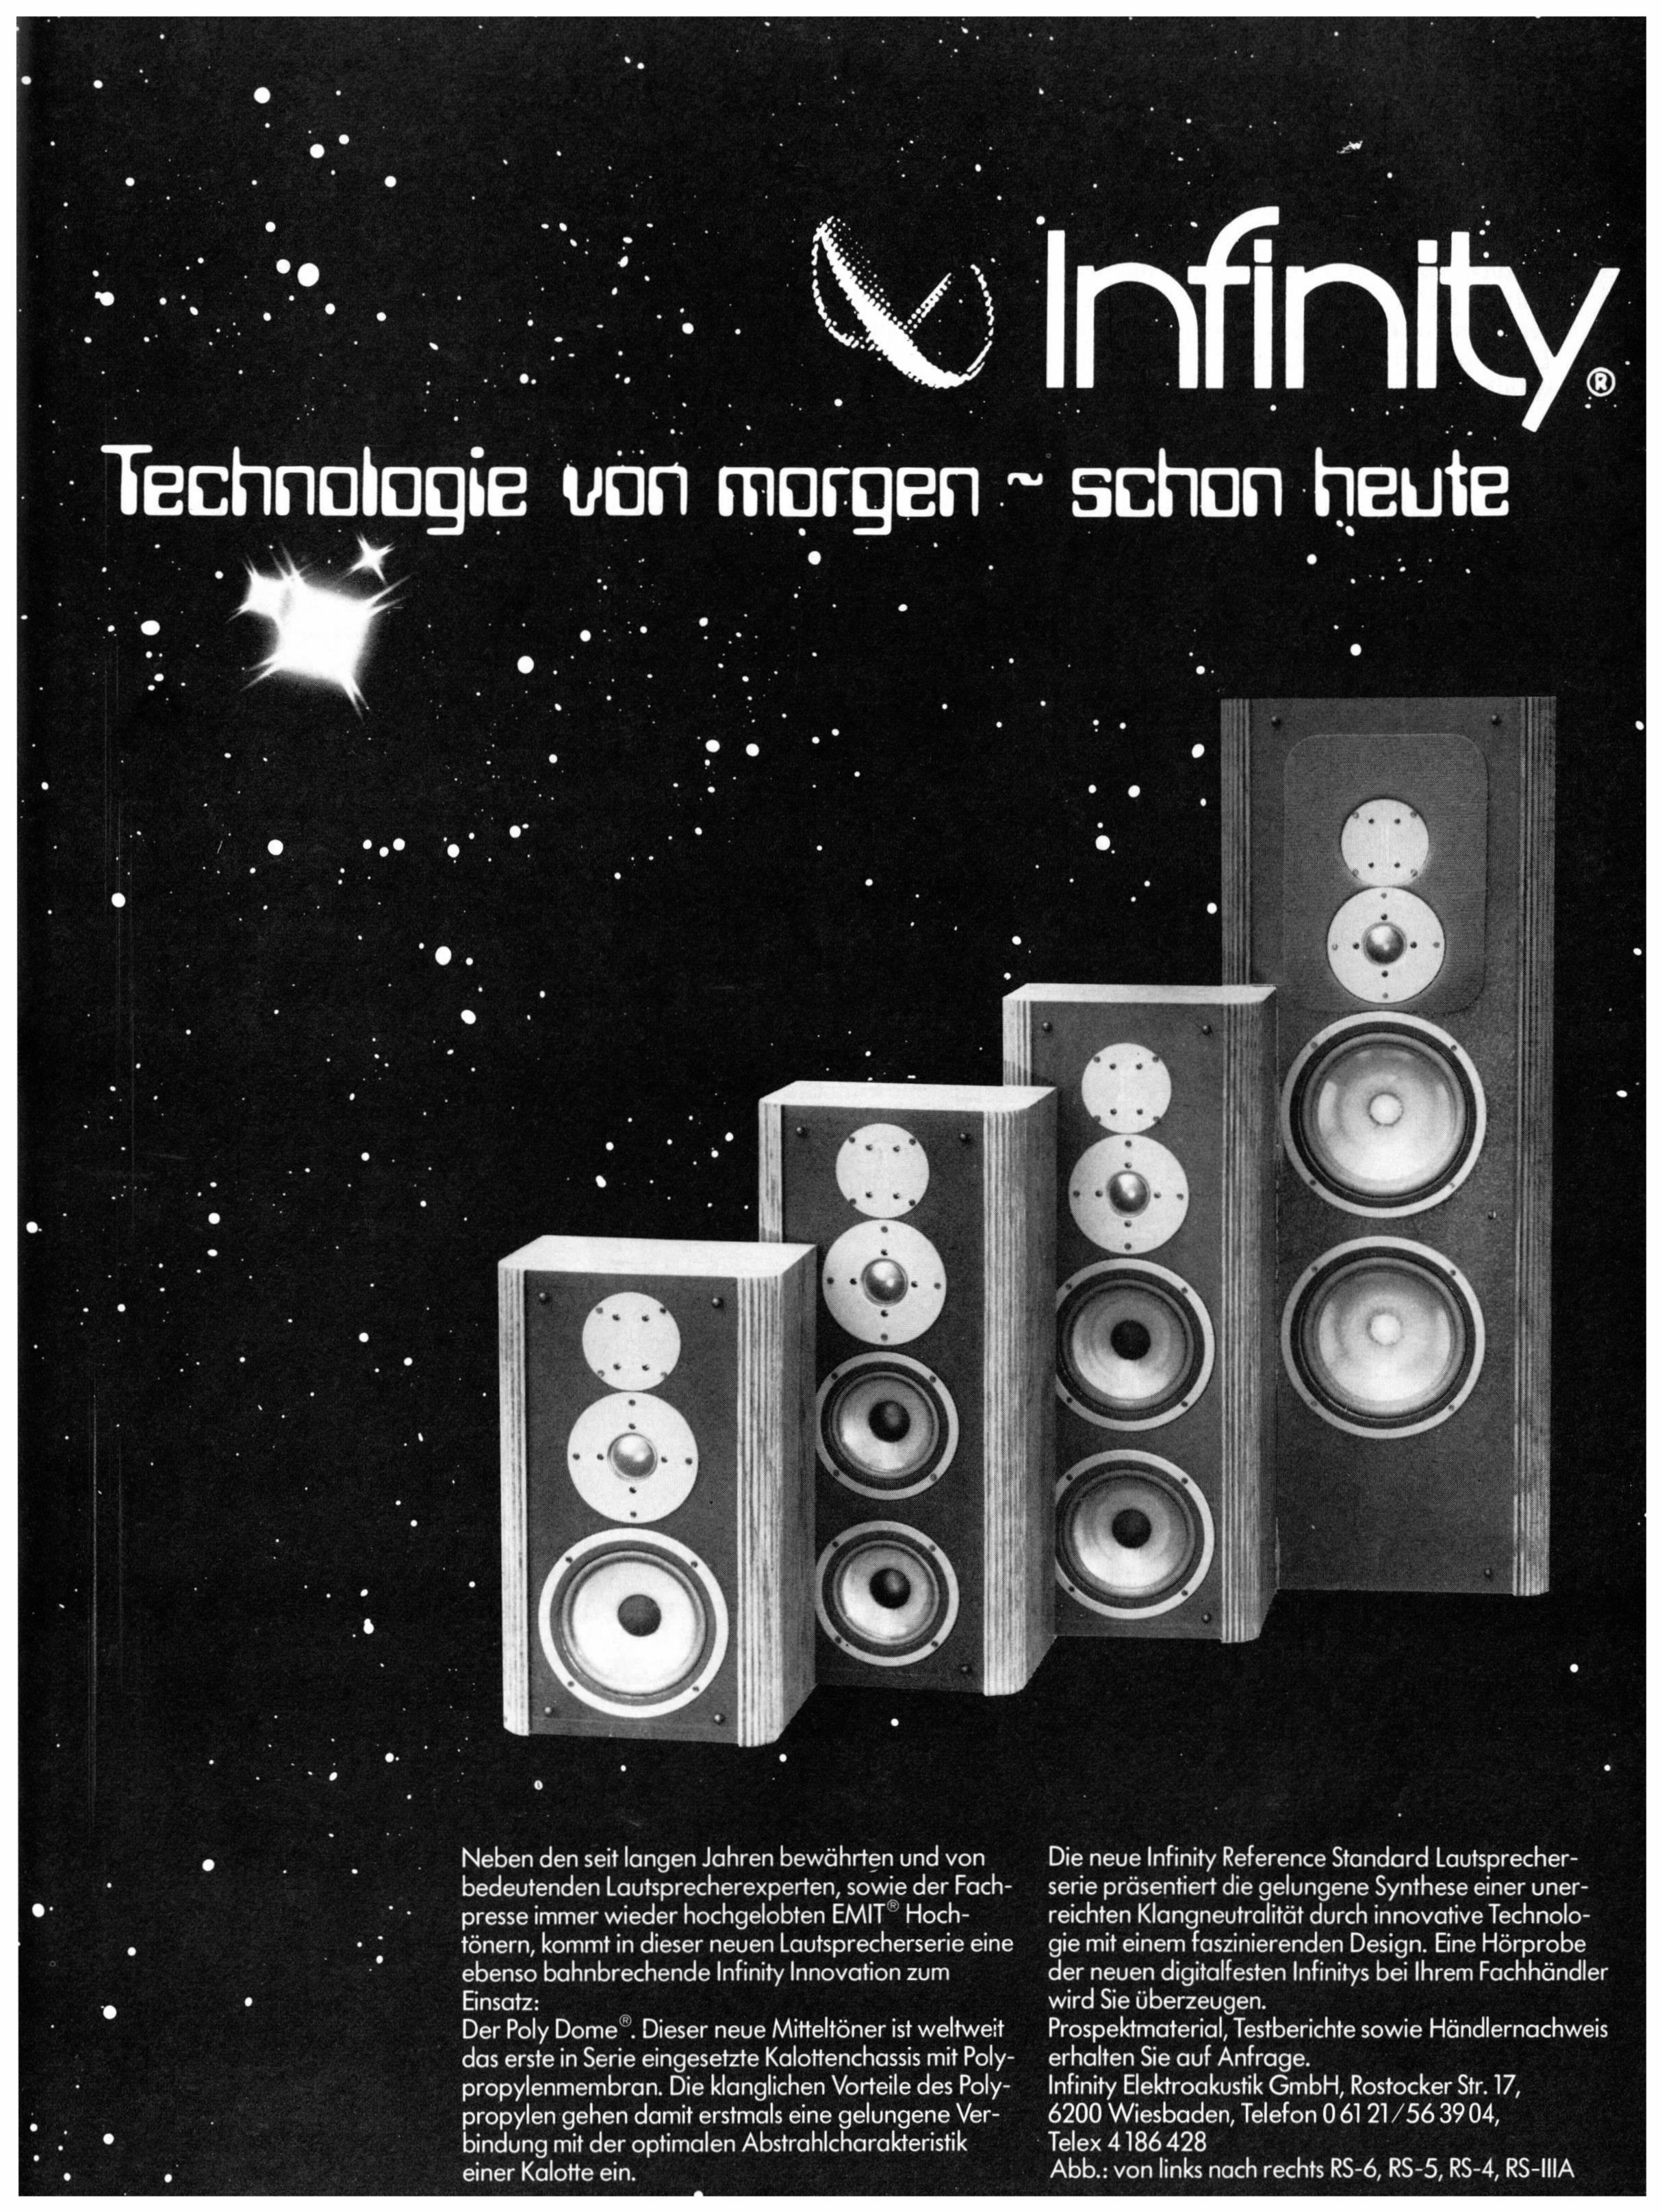 Infinity 1983 0.jpg